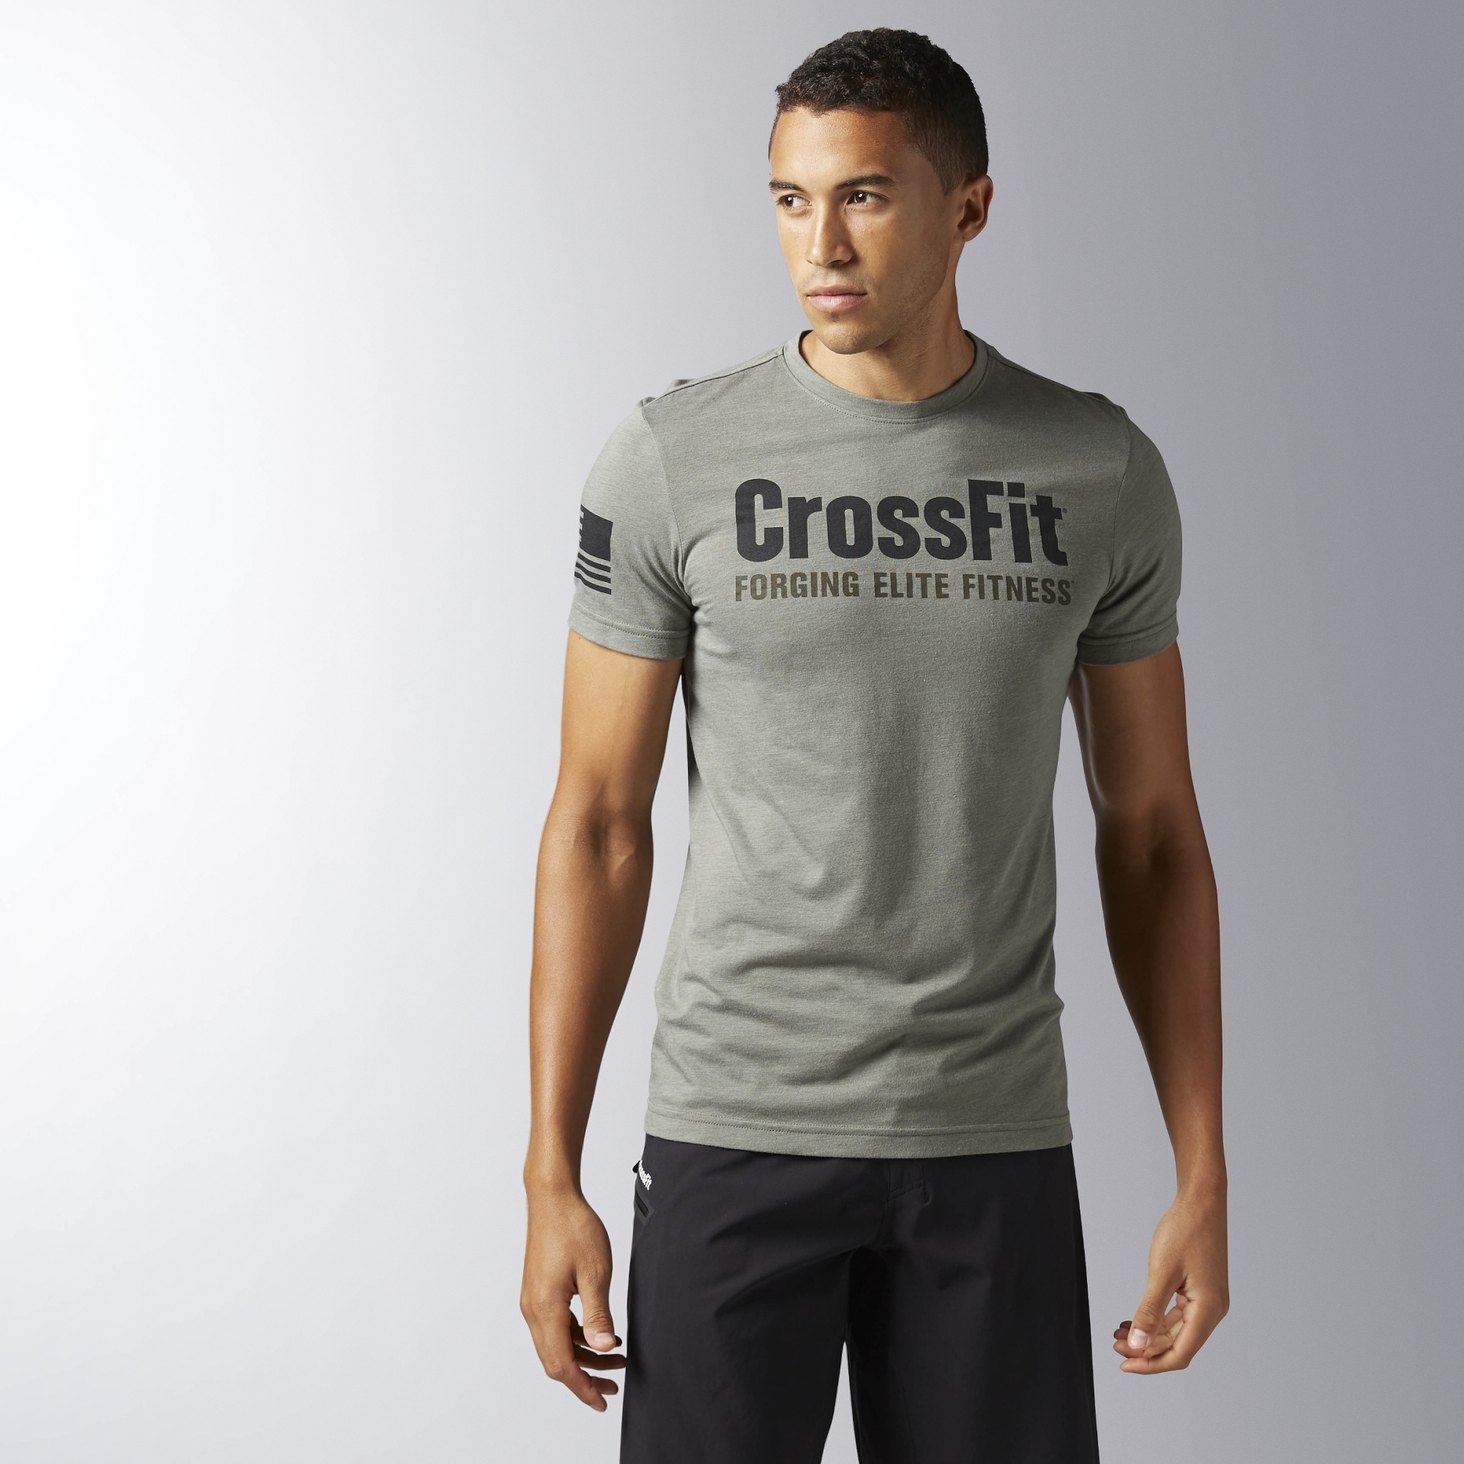 Reebok CrossFit Forging Elite Fitness Tee